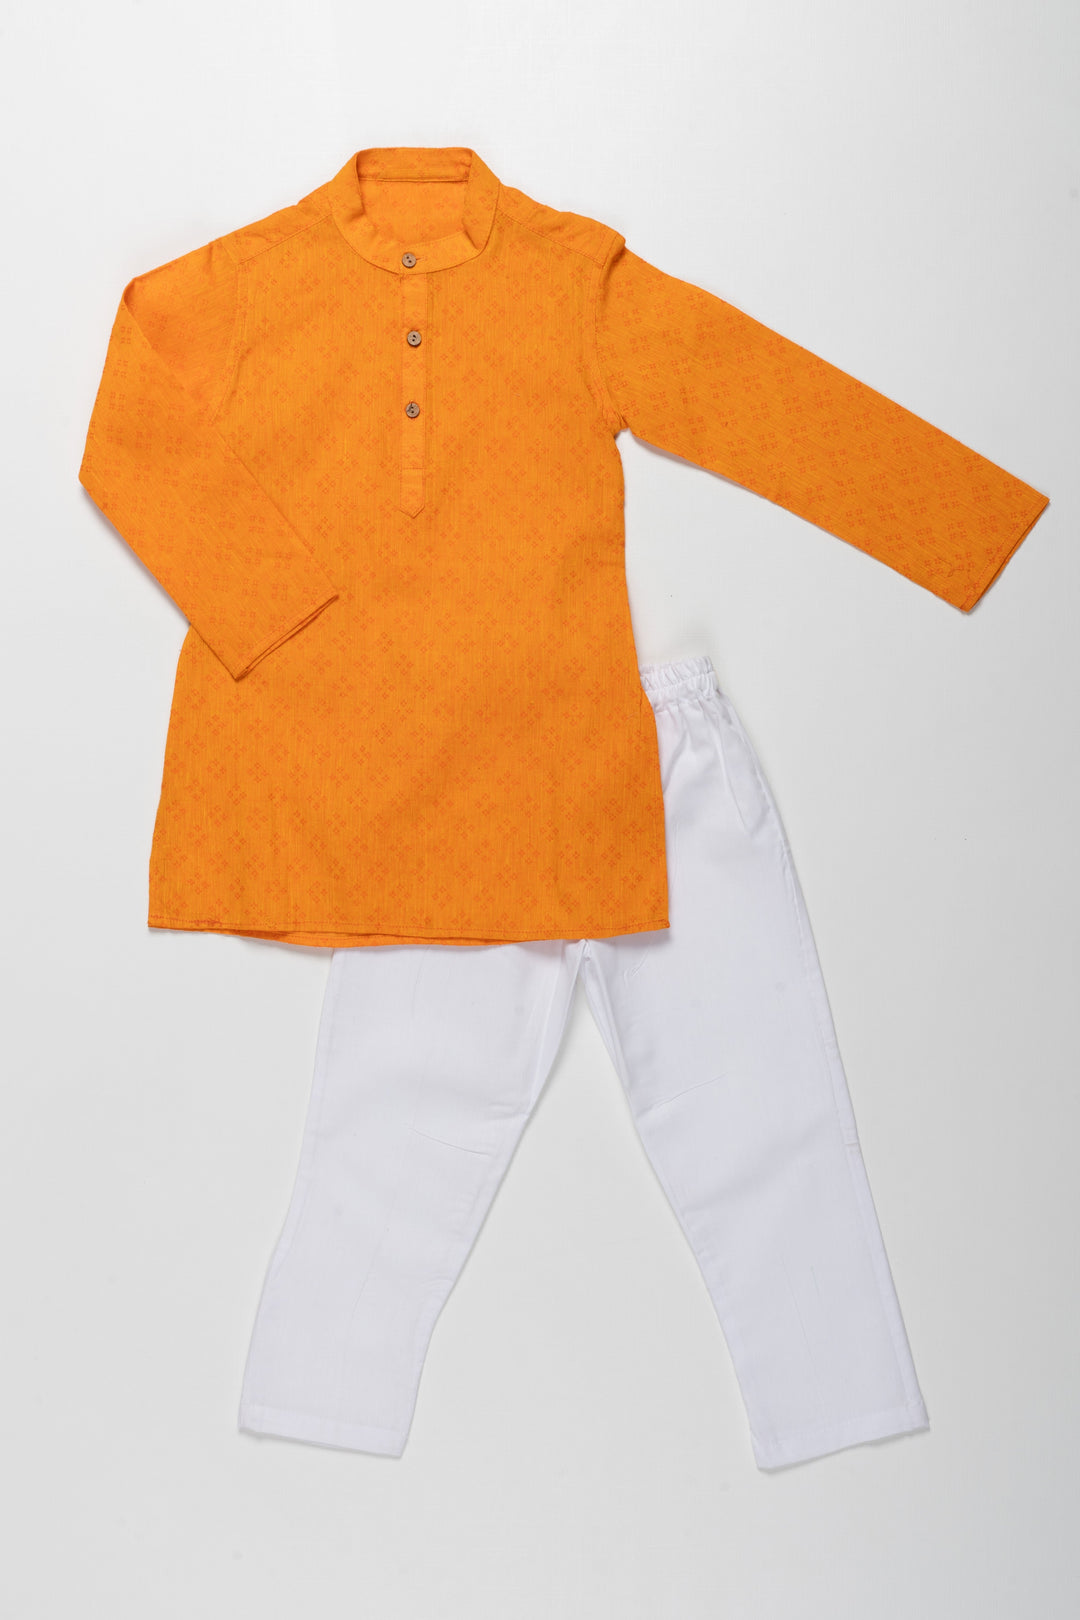 The Nesavu Boys Kurtha Set Bright Orange Kurta with White Pajama Set for Kids - Festive and Traditional Wear Nesavu 16 (1Y) / Orange BES55-16 Bright Orange Kurta with White Pajama Set for Kids | Festive and Traditional Wear | The Nesavu